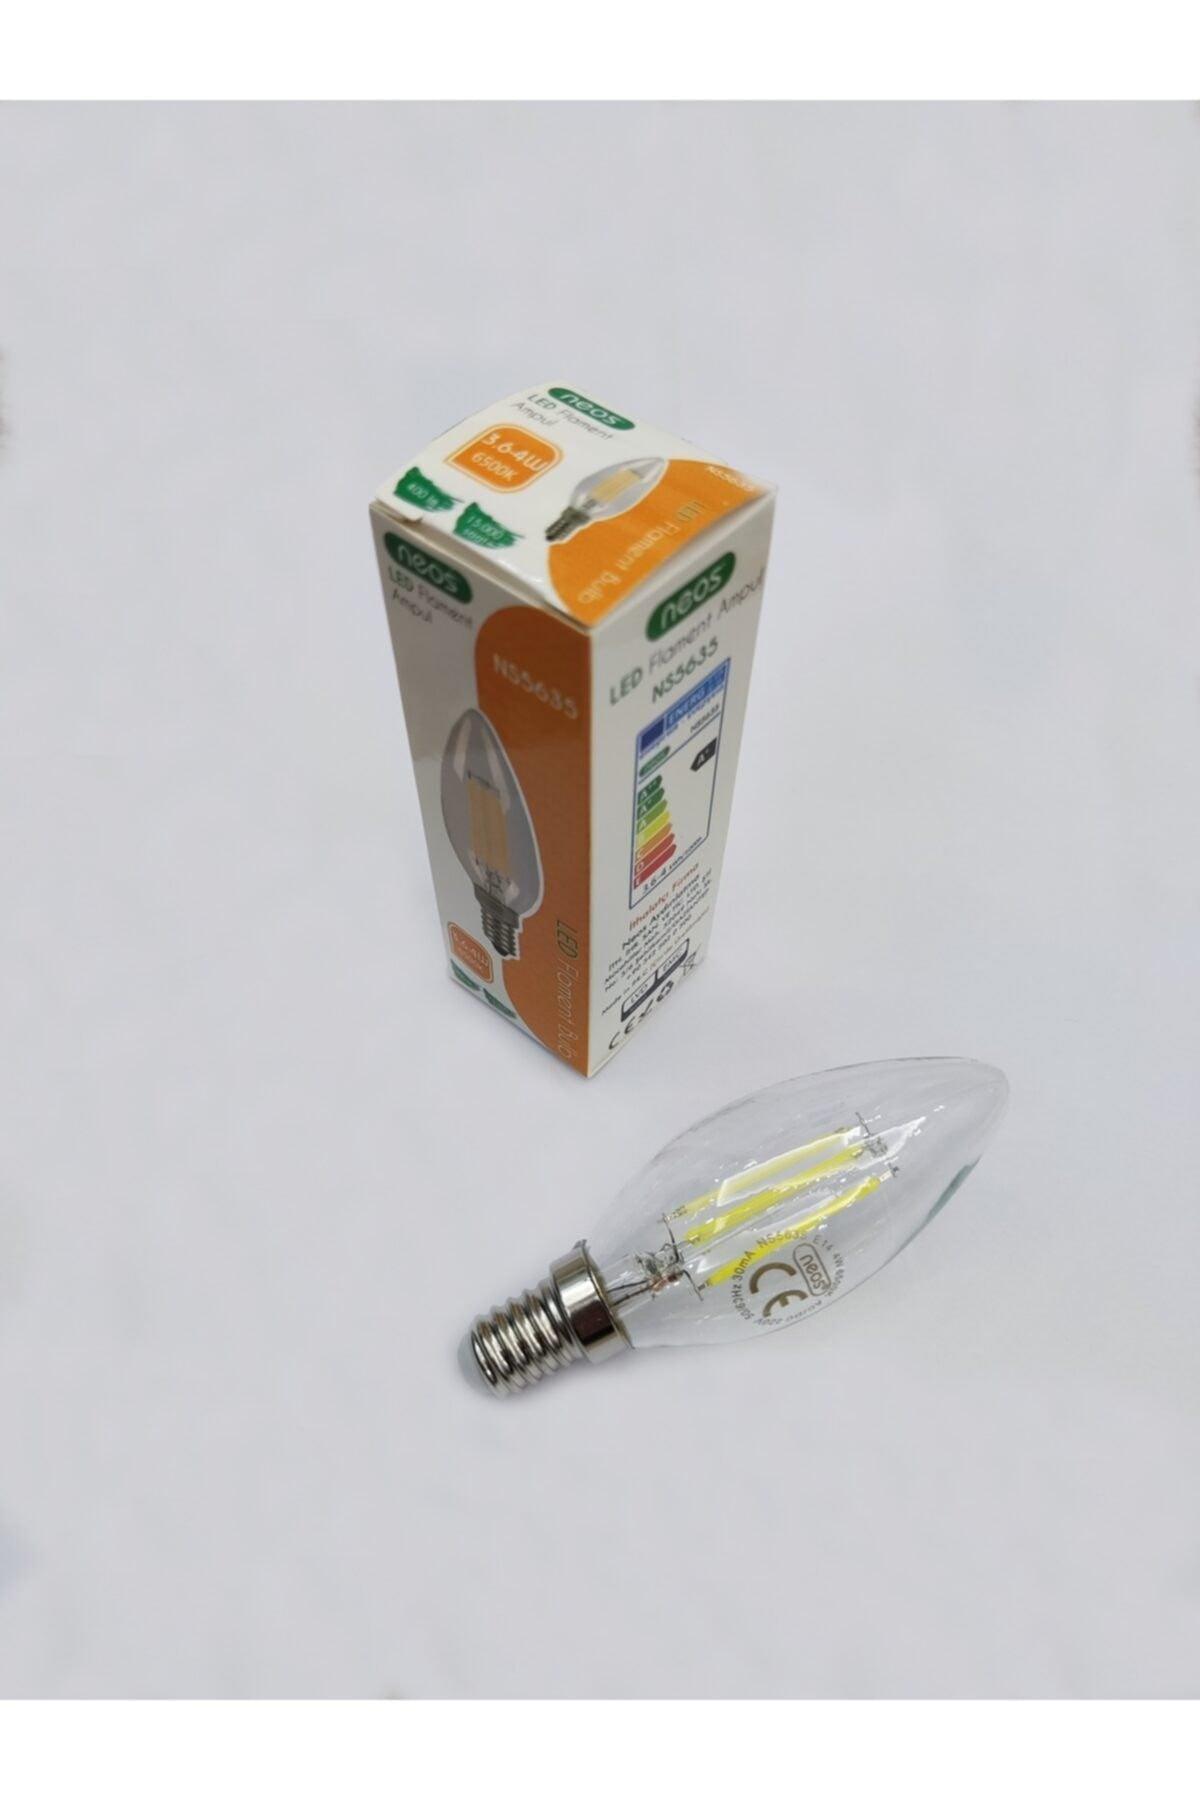 100 Pieces E14 Led Bulbs 3.6-4w 6500k White Light